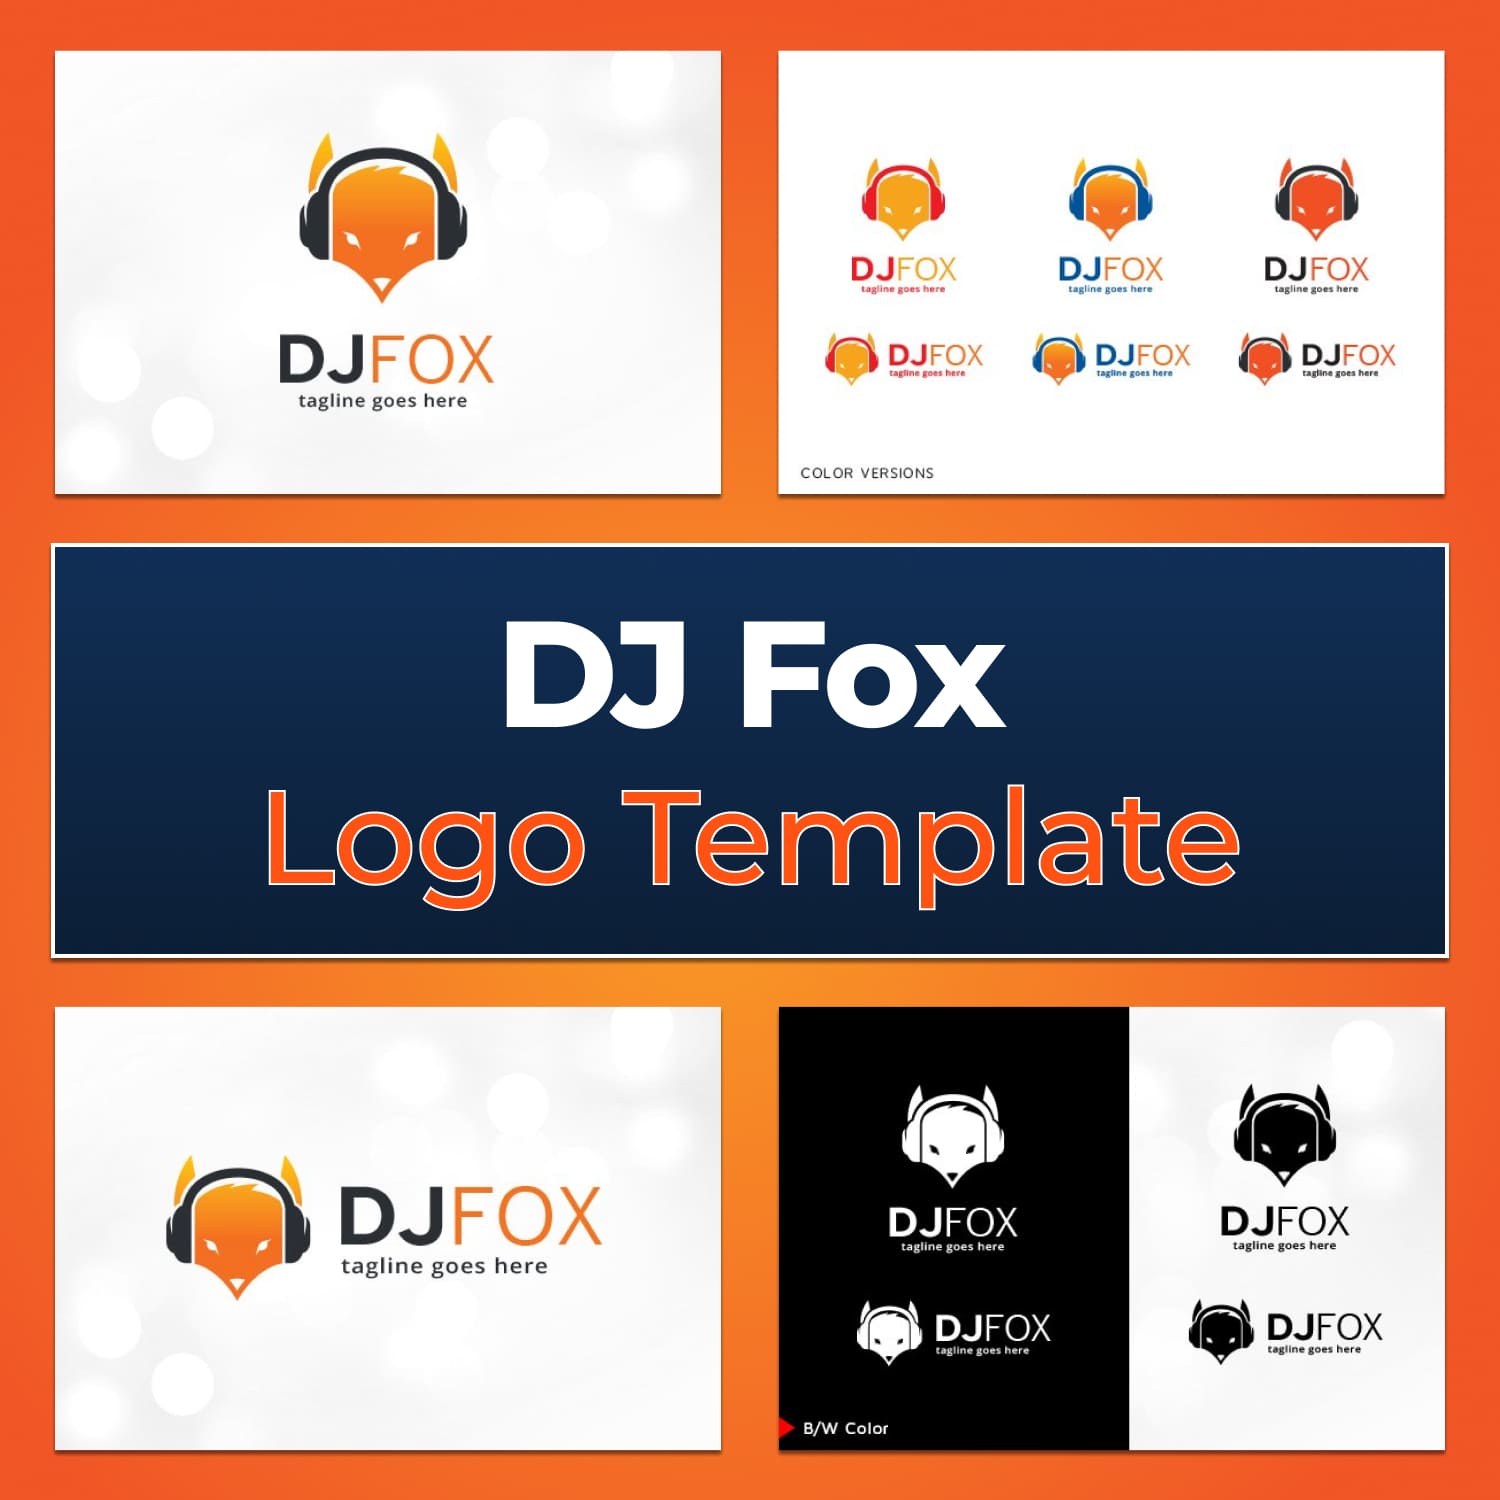 Music Graphics DJ Fox Logo Template cover image.